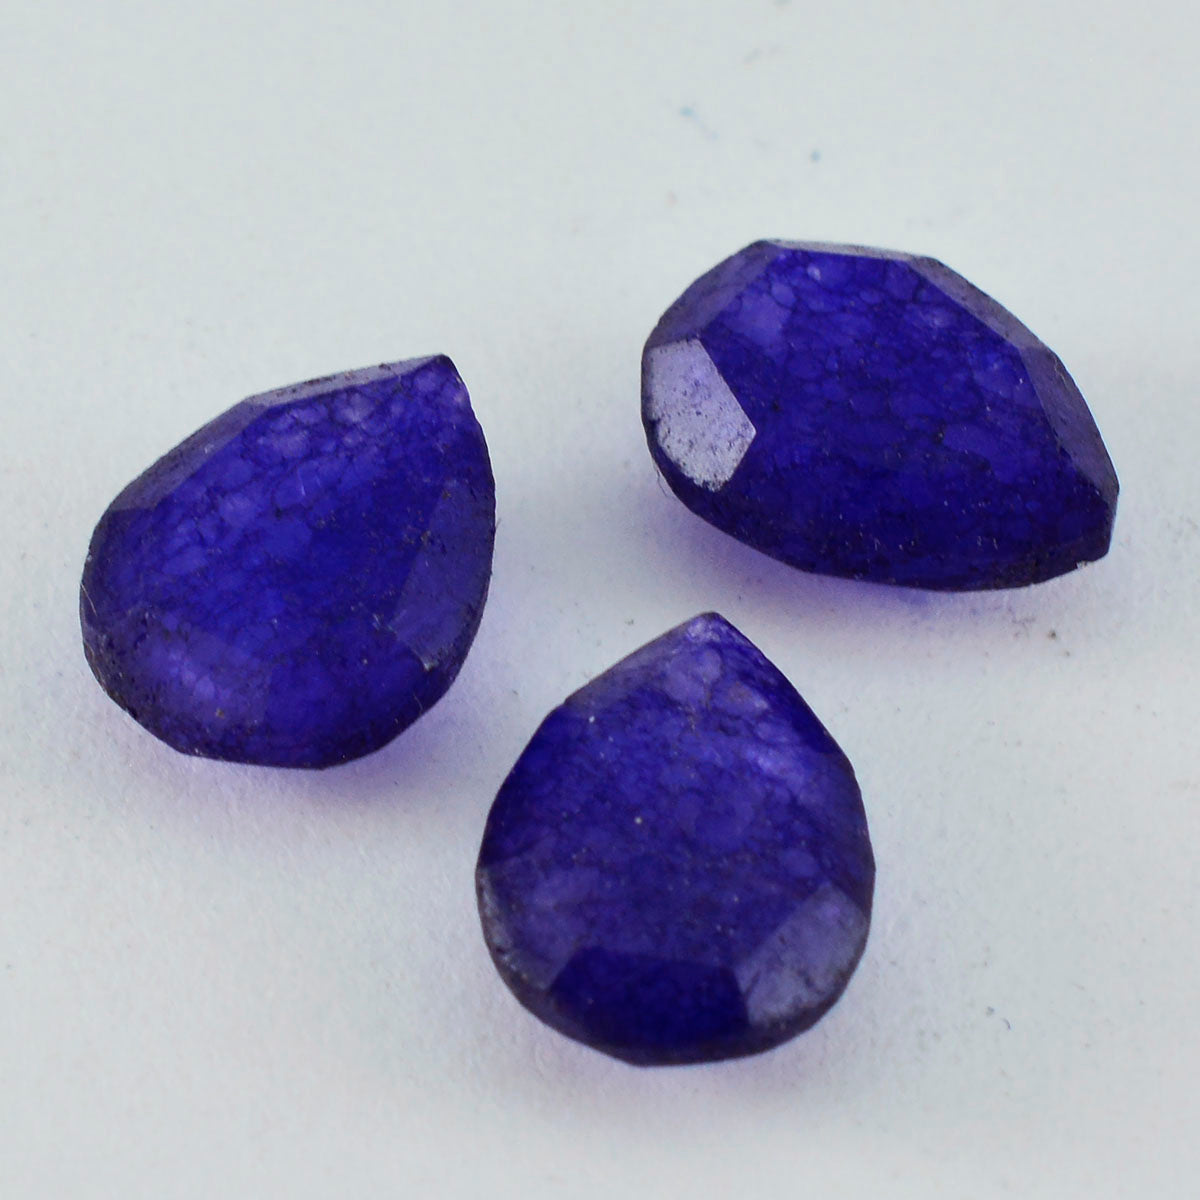 Riyogems 1PC Genuine Blue Jasper Faceted 12x16 mm Pear Shape wonderful Quality Loose Stone